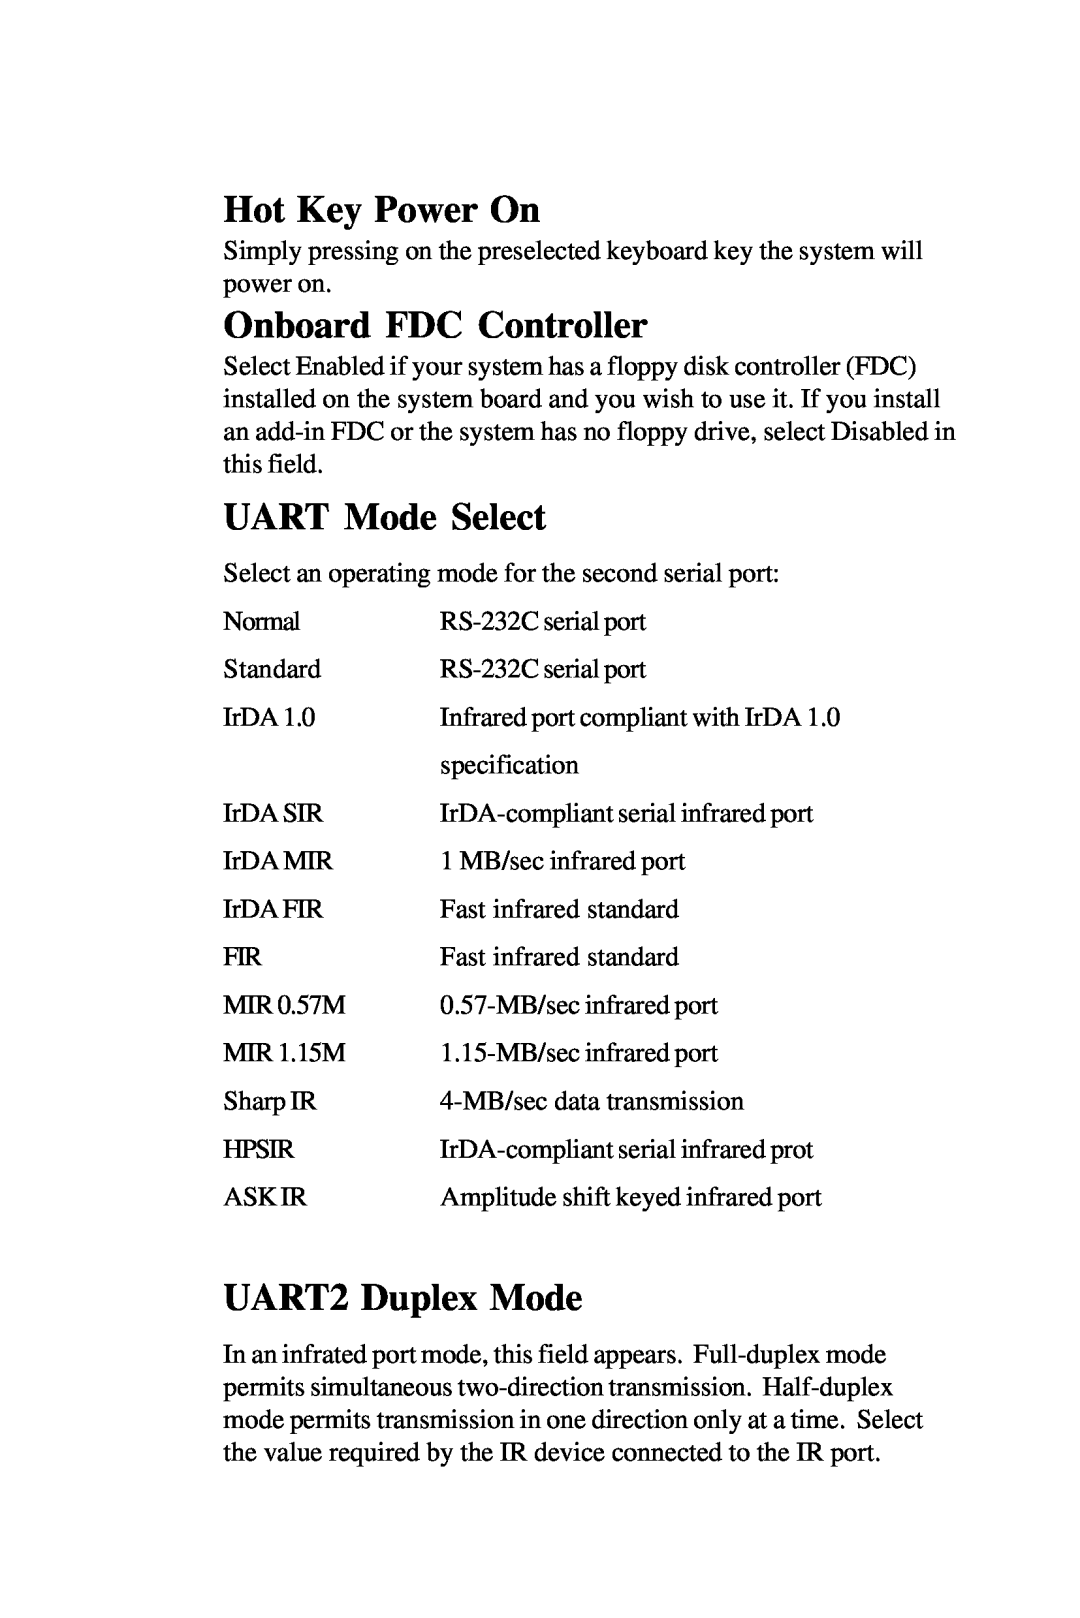 Intel PCM-6896 manual Hot Key Power On, Onboard FDC Controller, UART Mode Select, UART2 Duplex Mode 